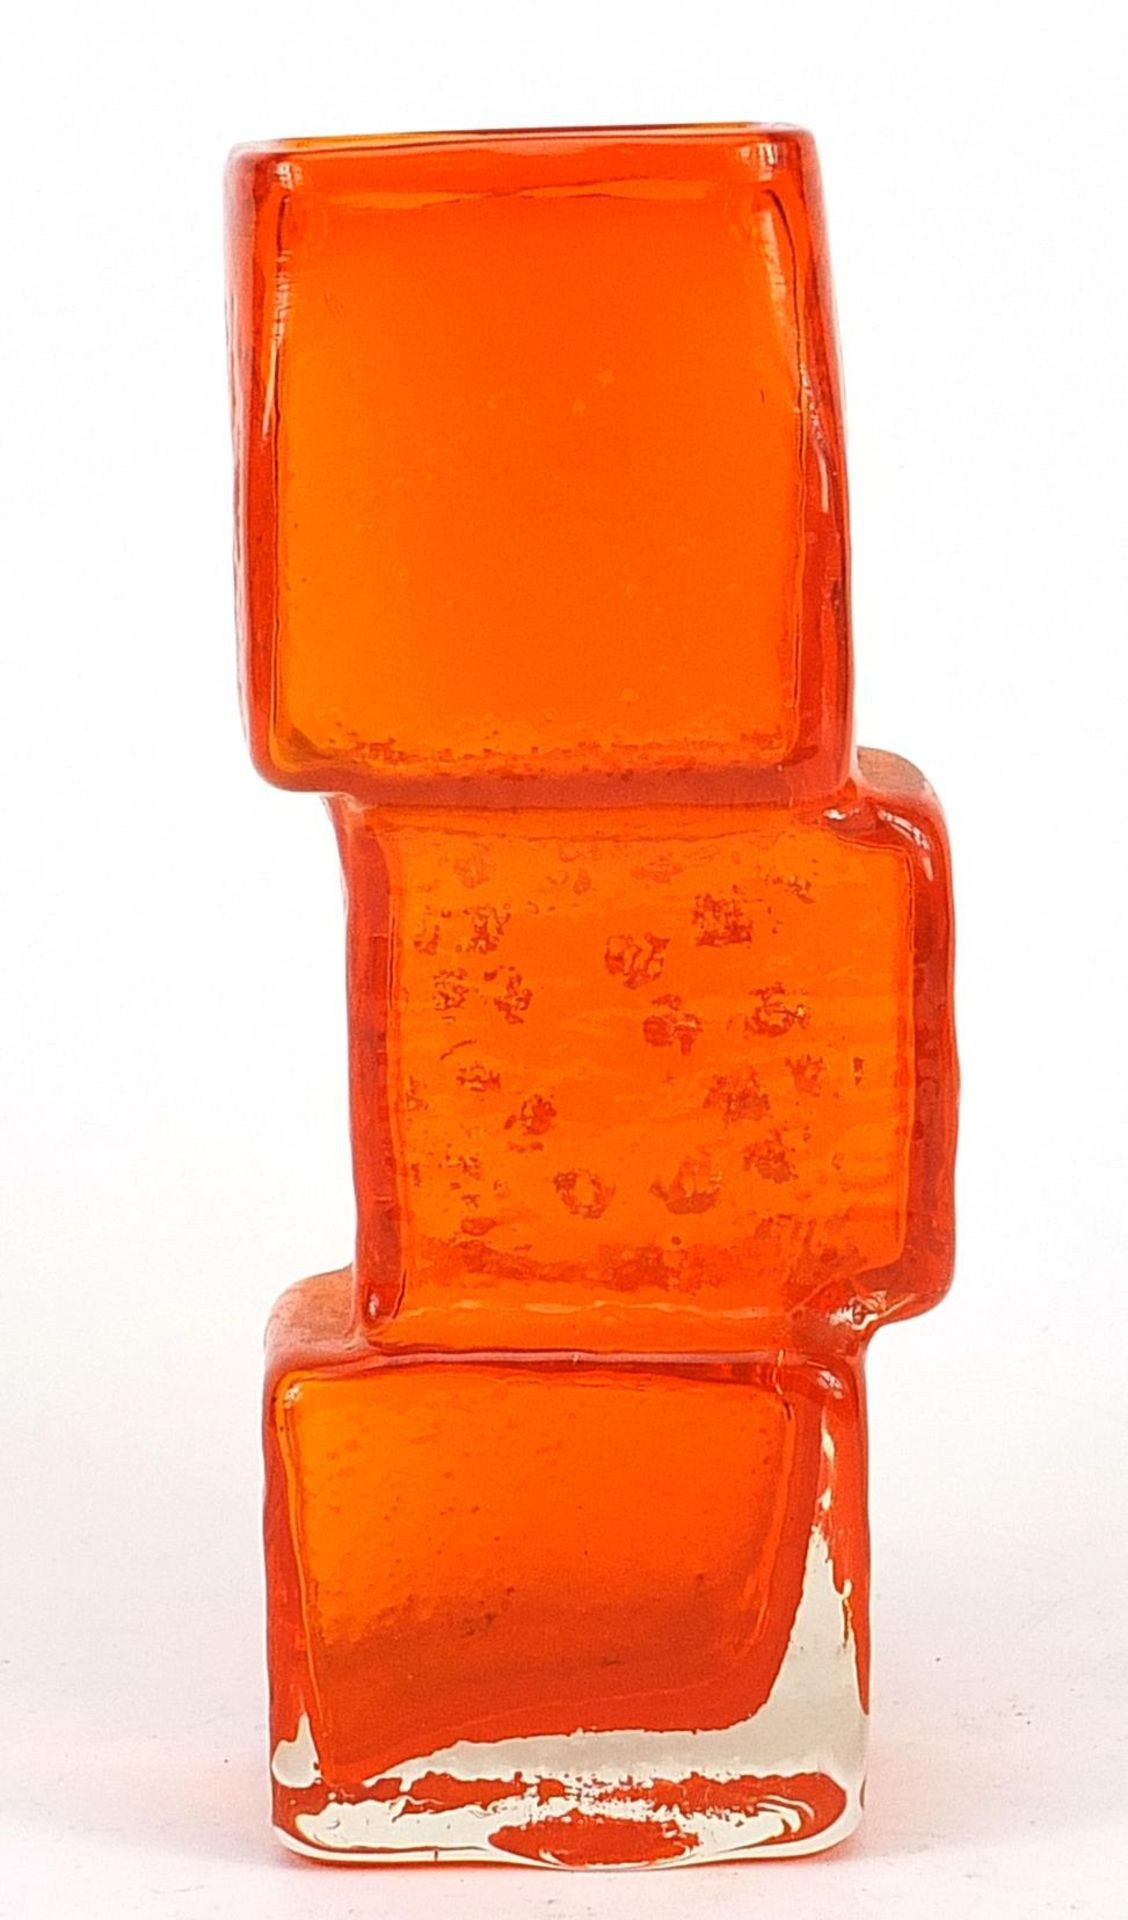 Geoffrey Baxter for Whitefriars, drunken bricklayer glass vase in tangerine, 21.5cm high Overall - Image 2 of 3